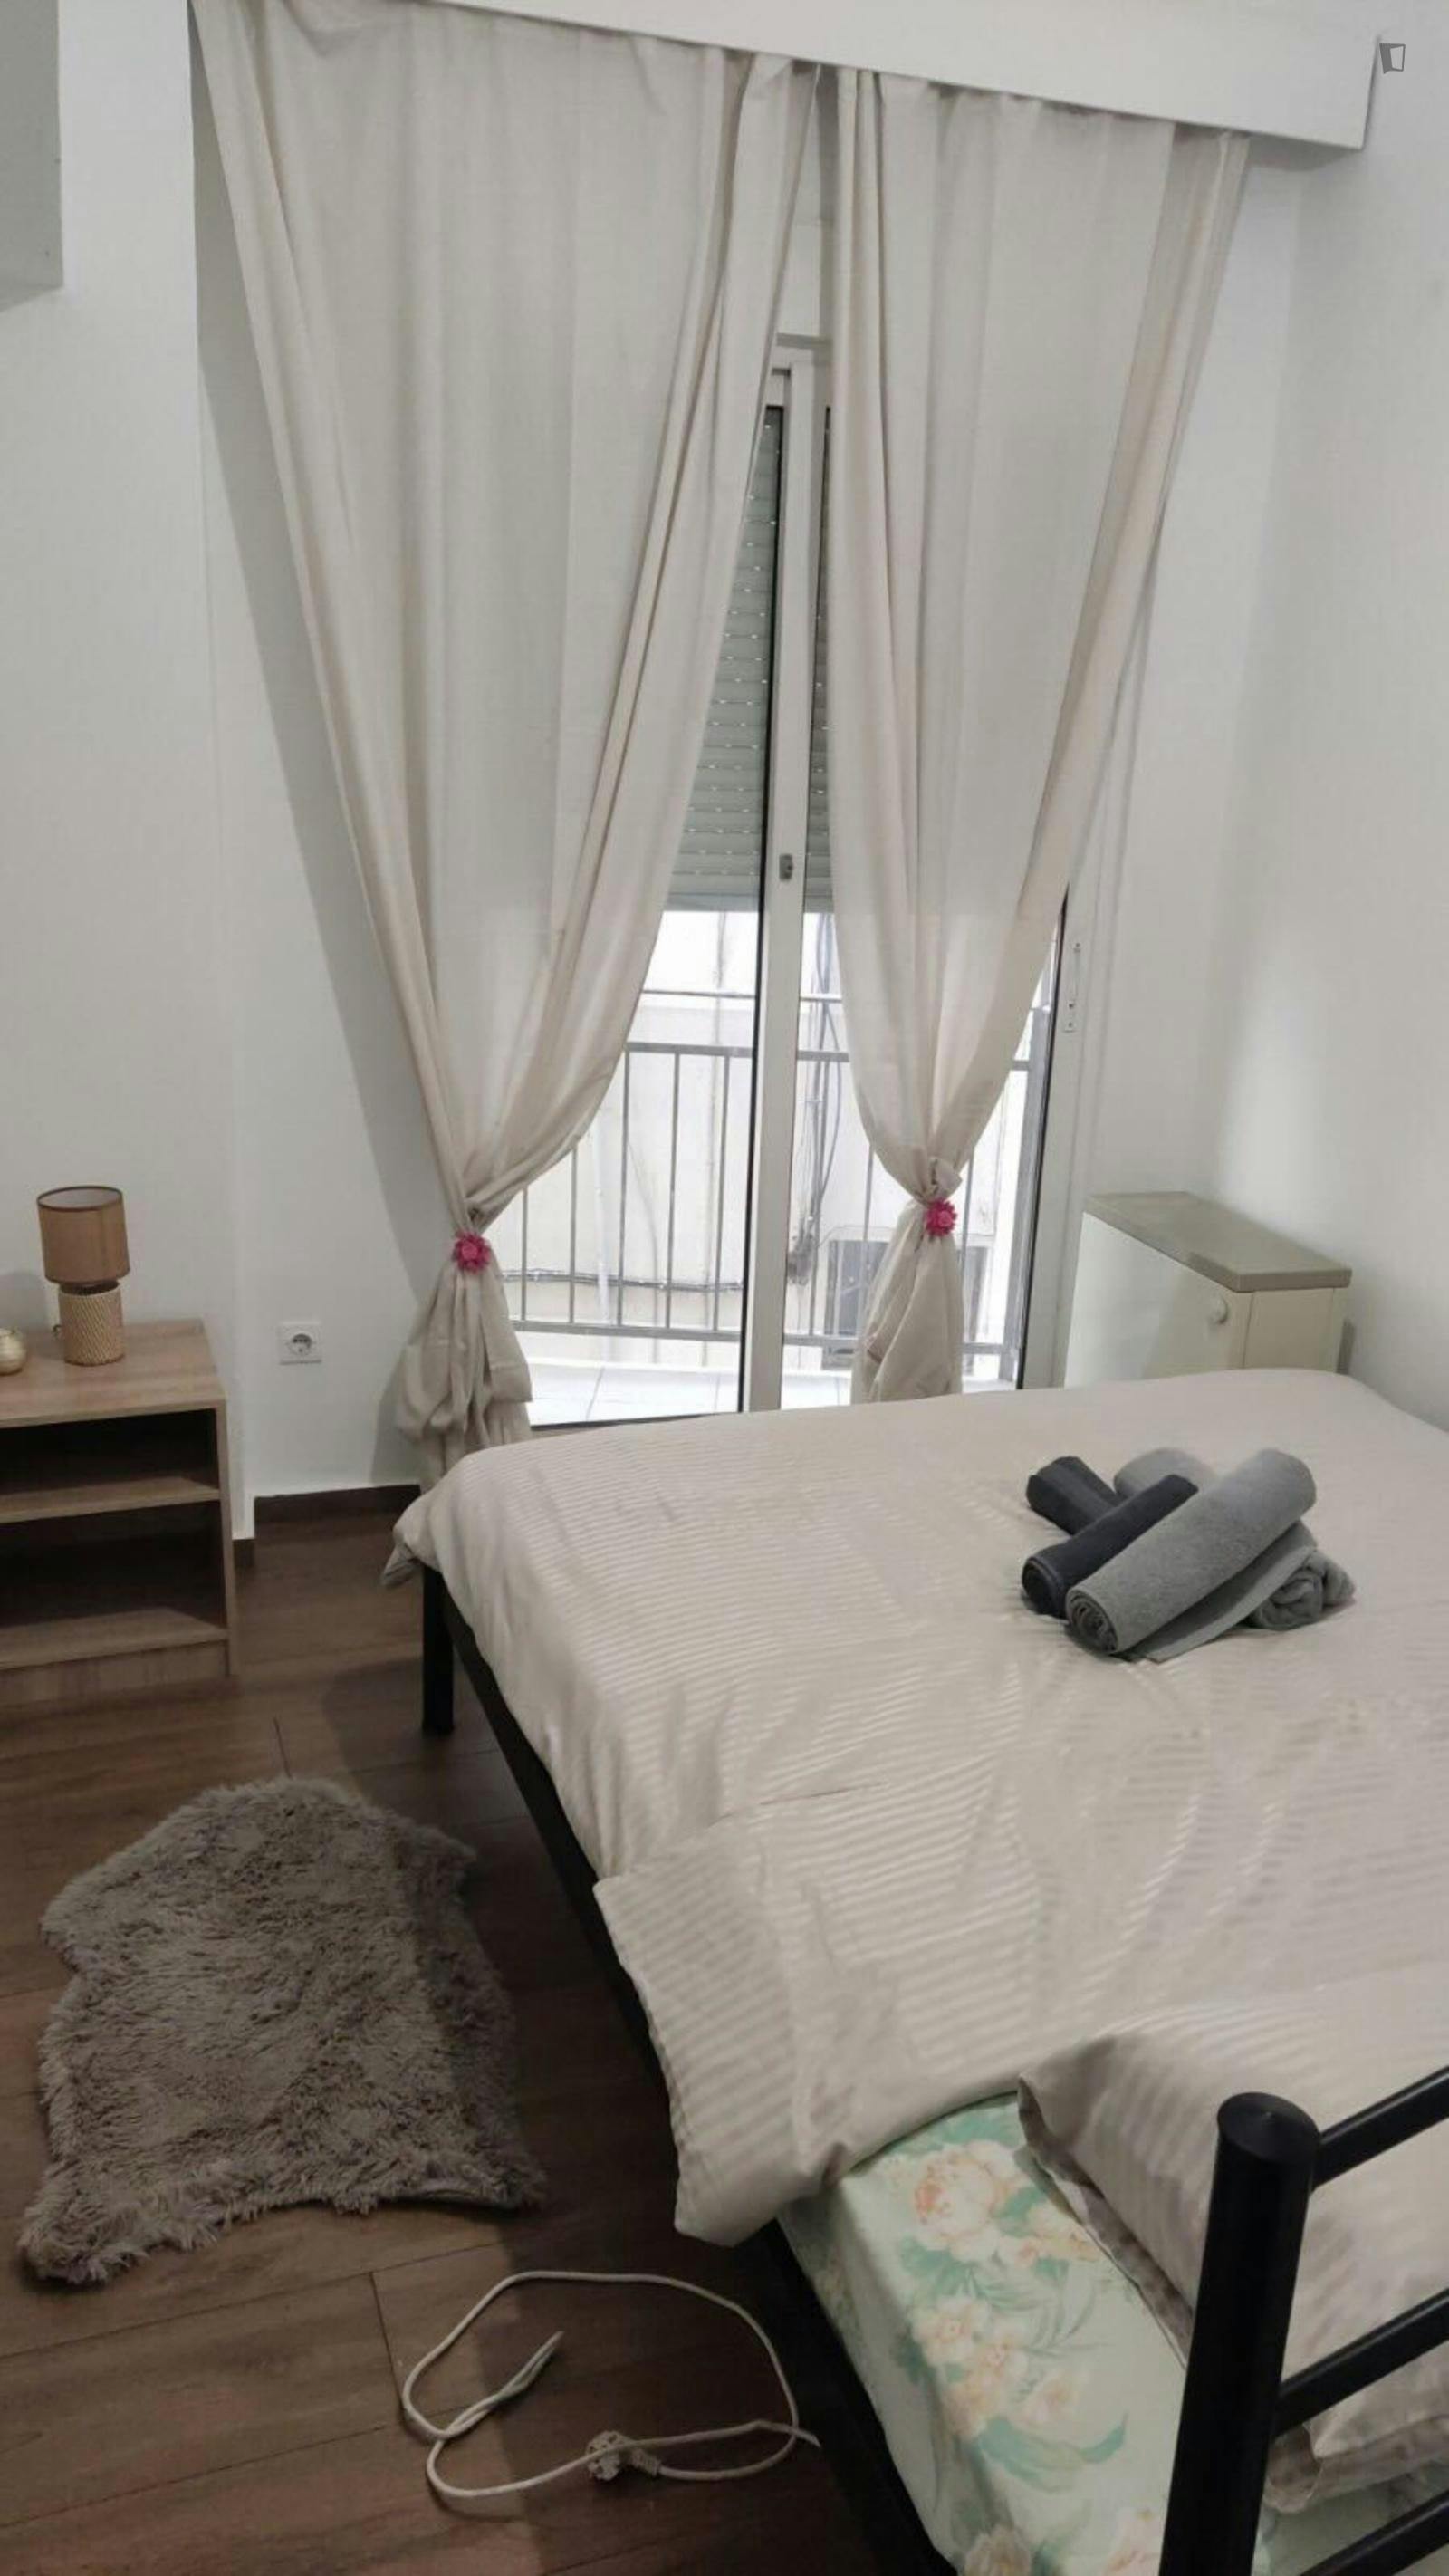 Elegenat private double bedroom near to Aristotle University of Thessaloniki